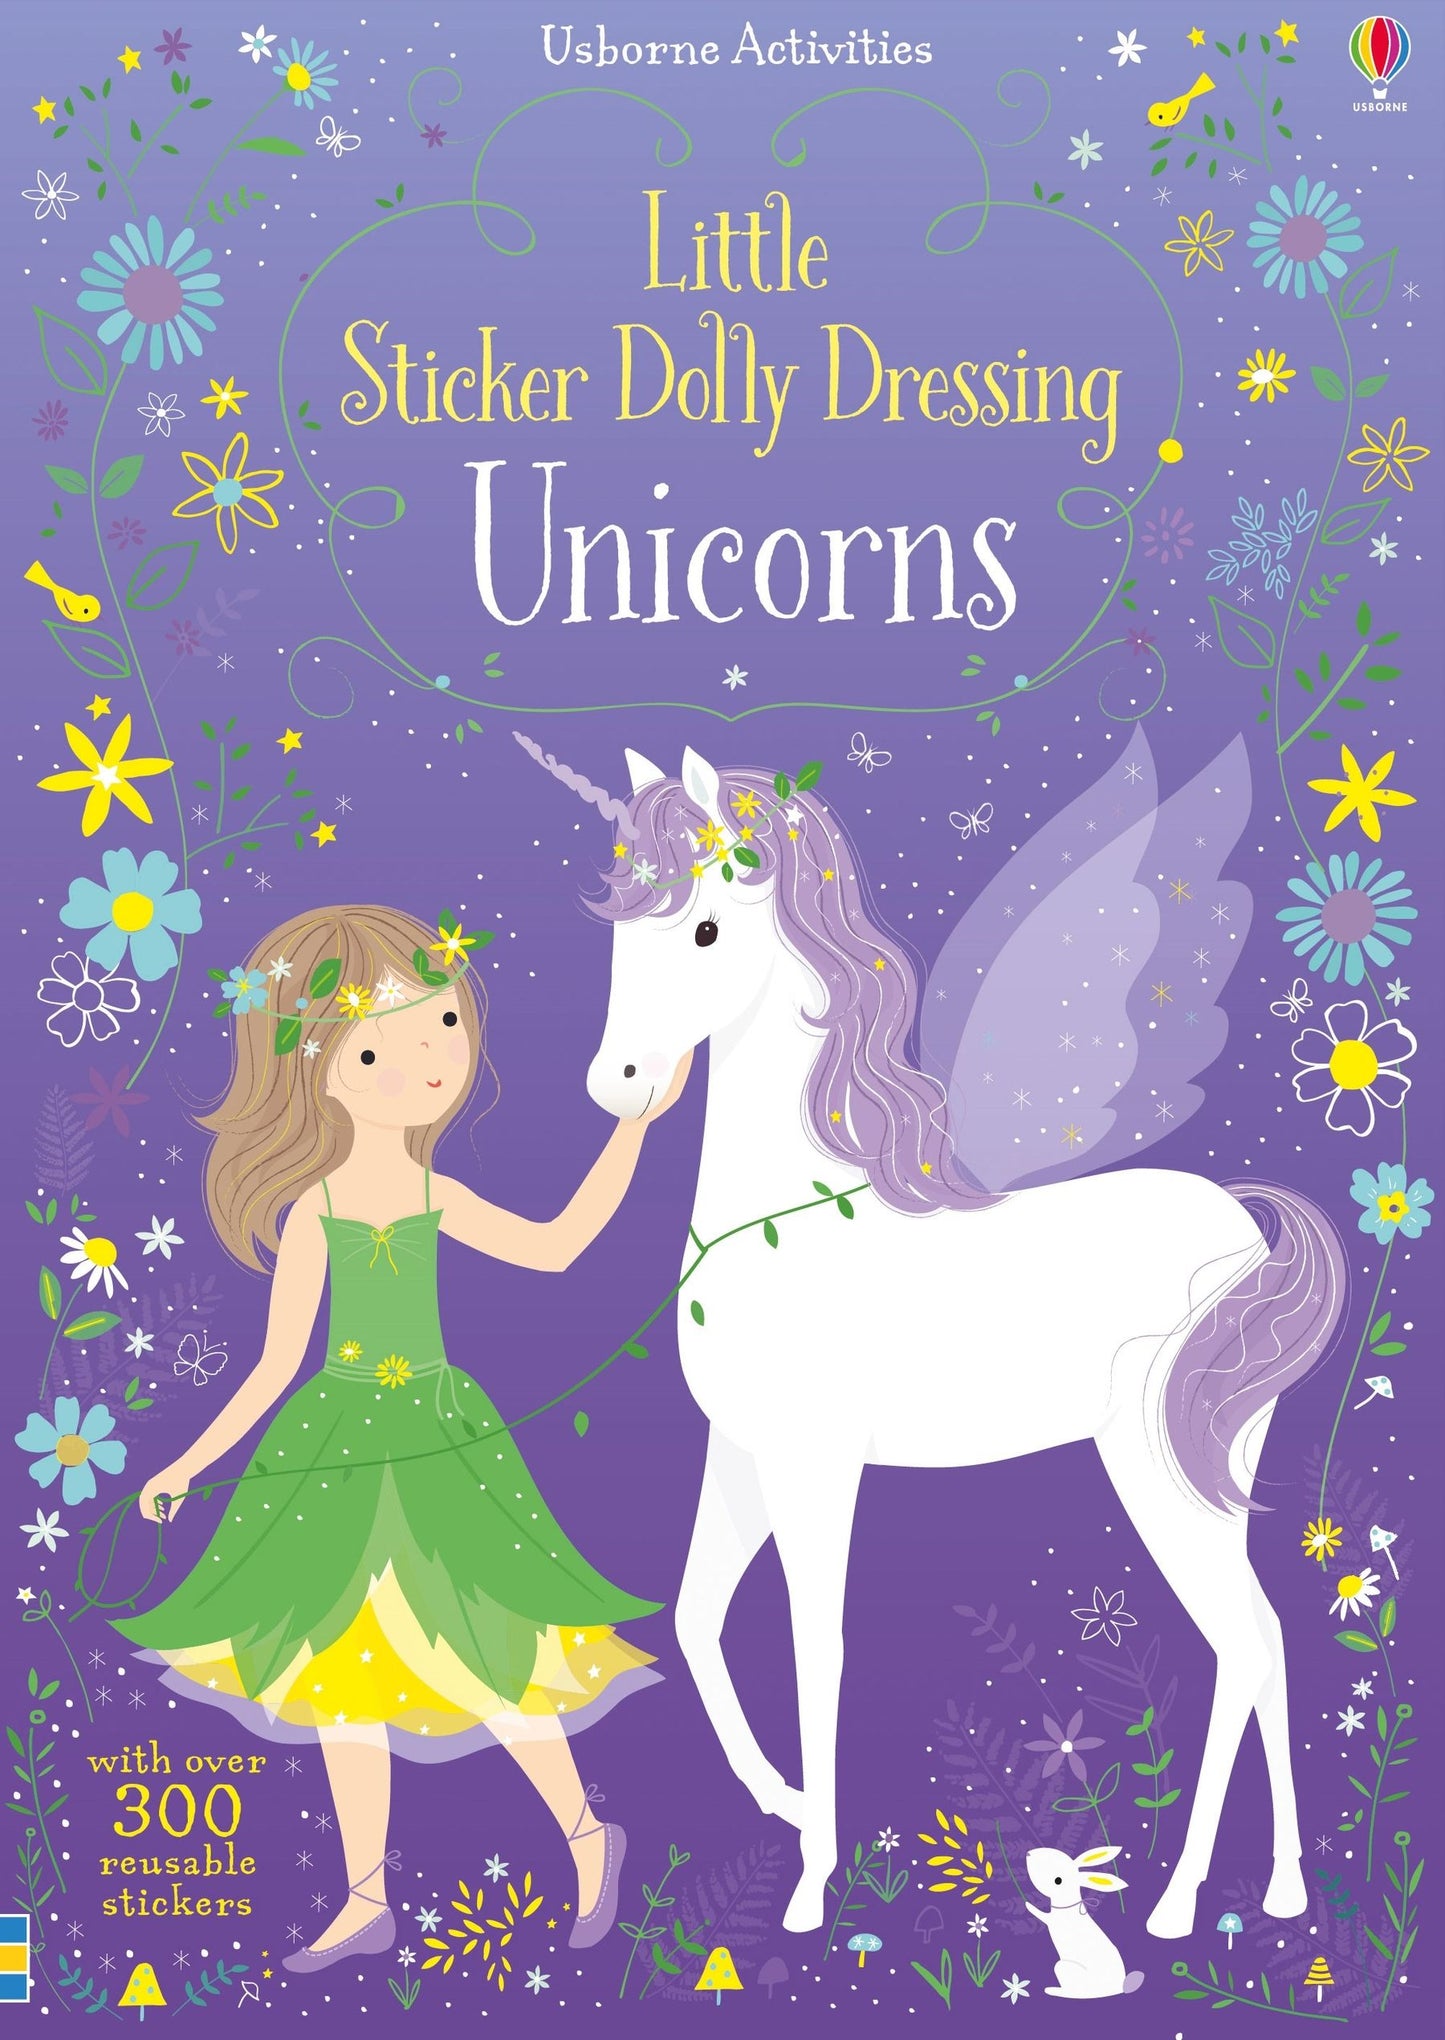 Usborne Books - Little Sticker Dolly Dressing Unicorns